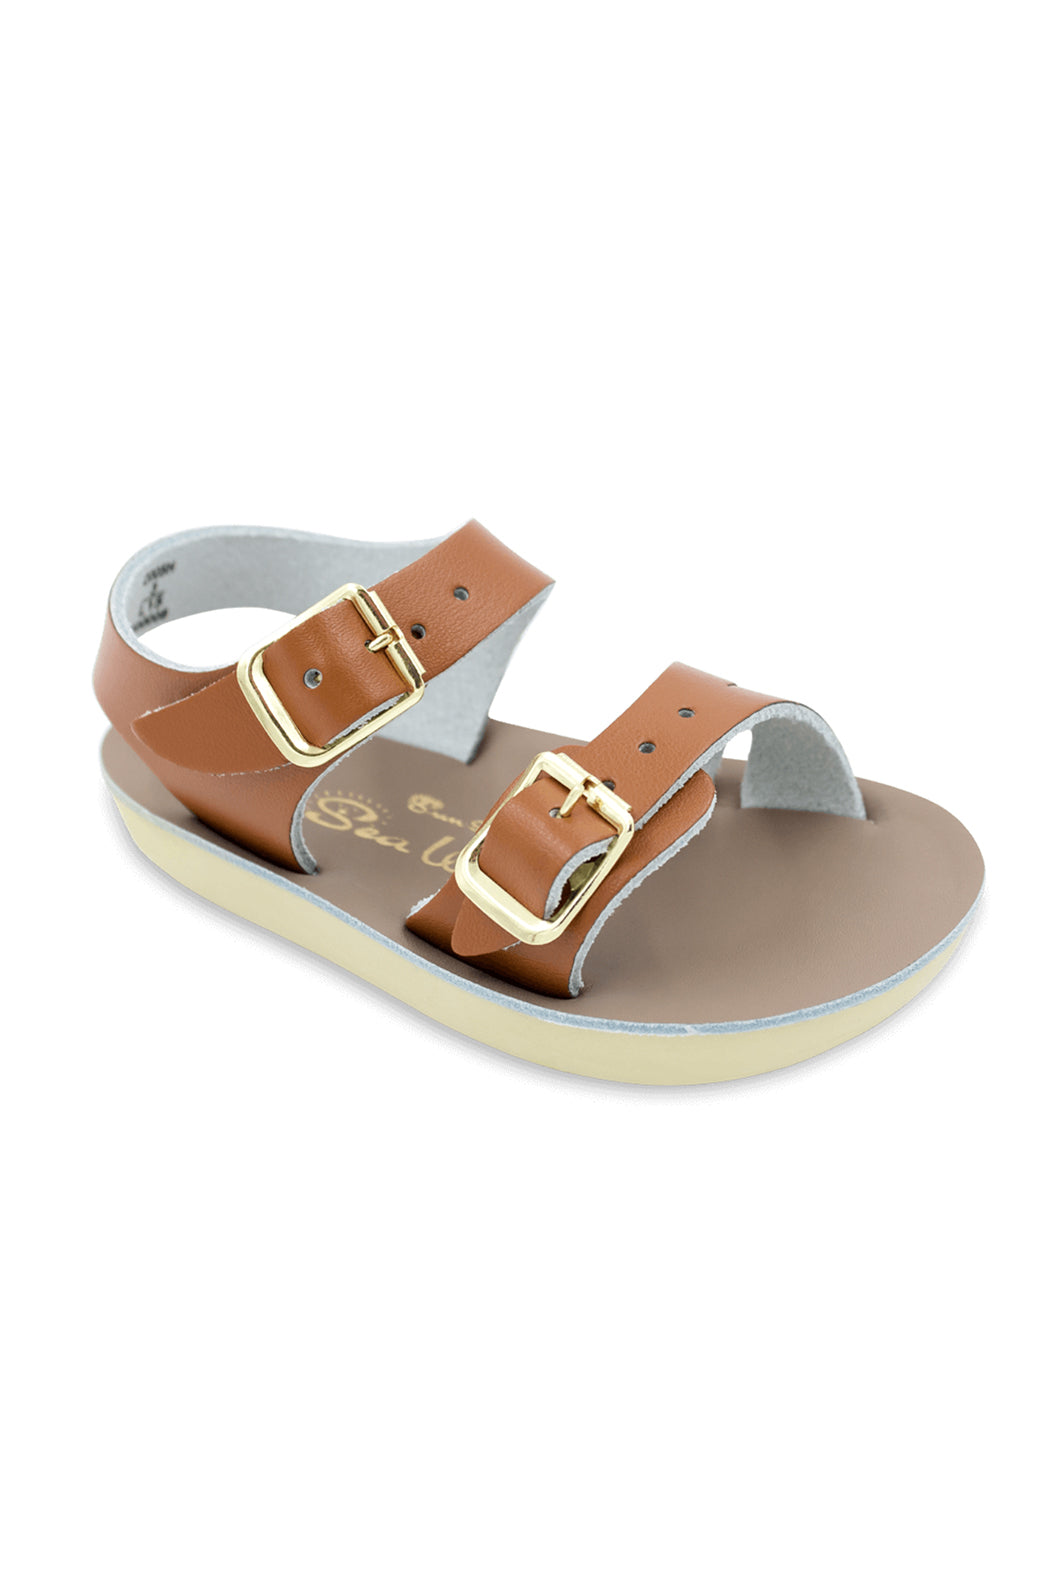 Hoy Shoes Sun-San Sea Wee Salt Water Sandal